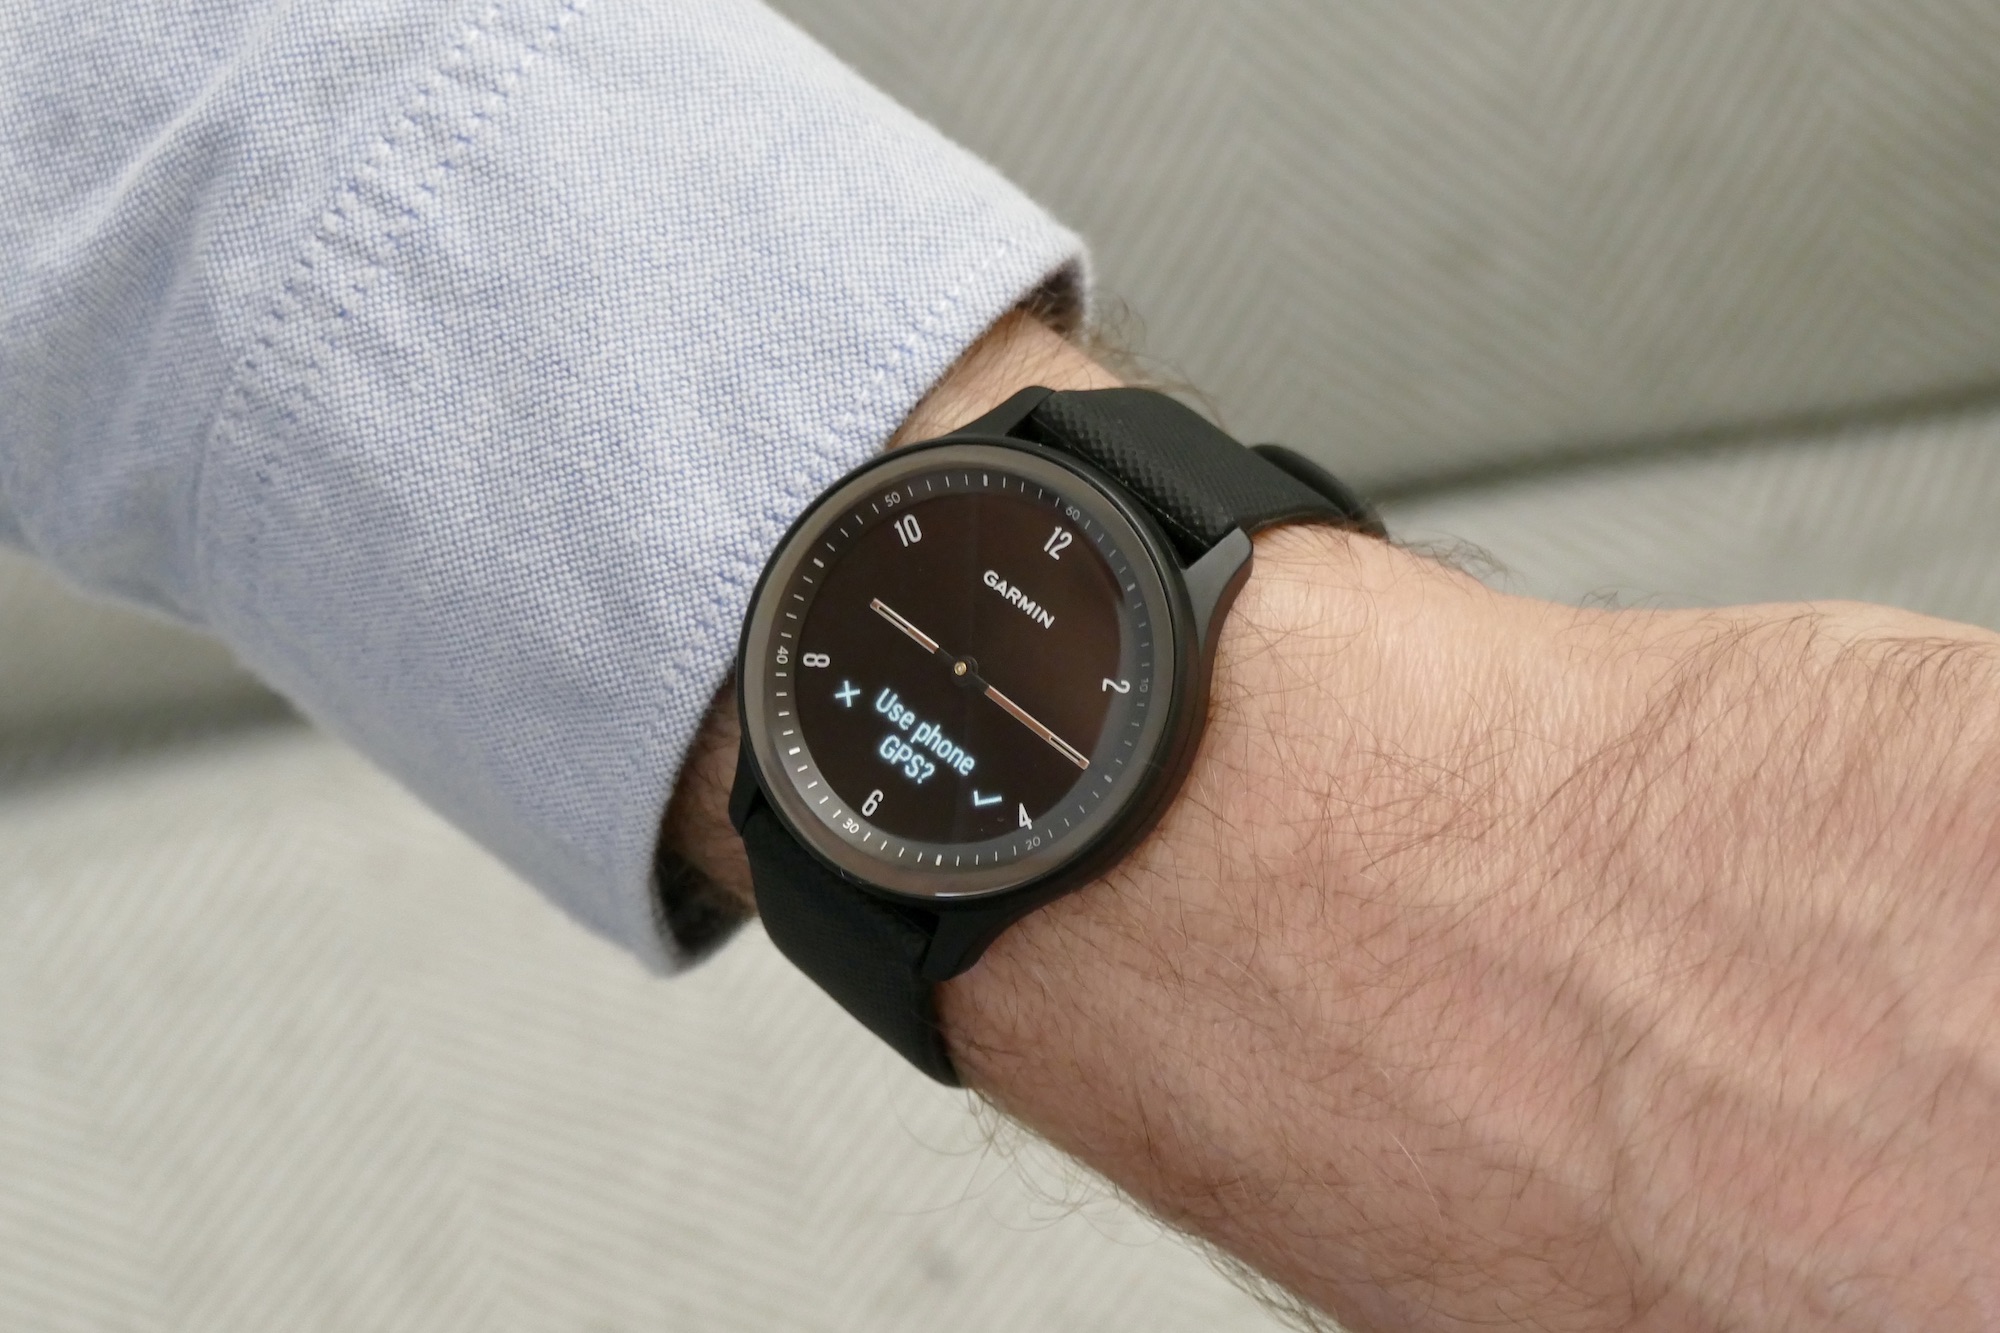 Garmin Vivomove HR Review: Stylish Smartwatch Falters on Fitness